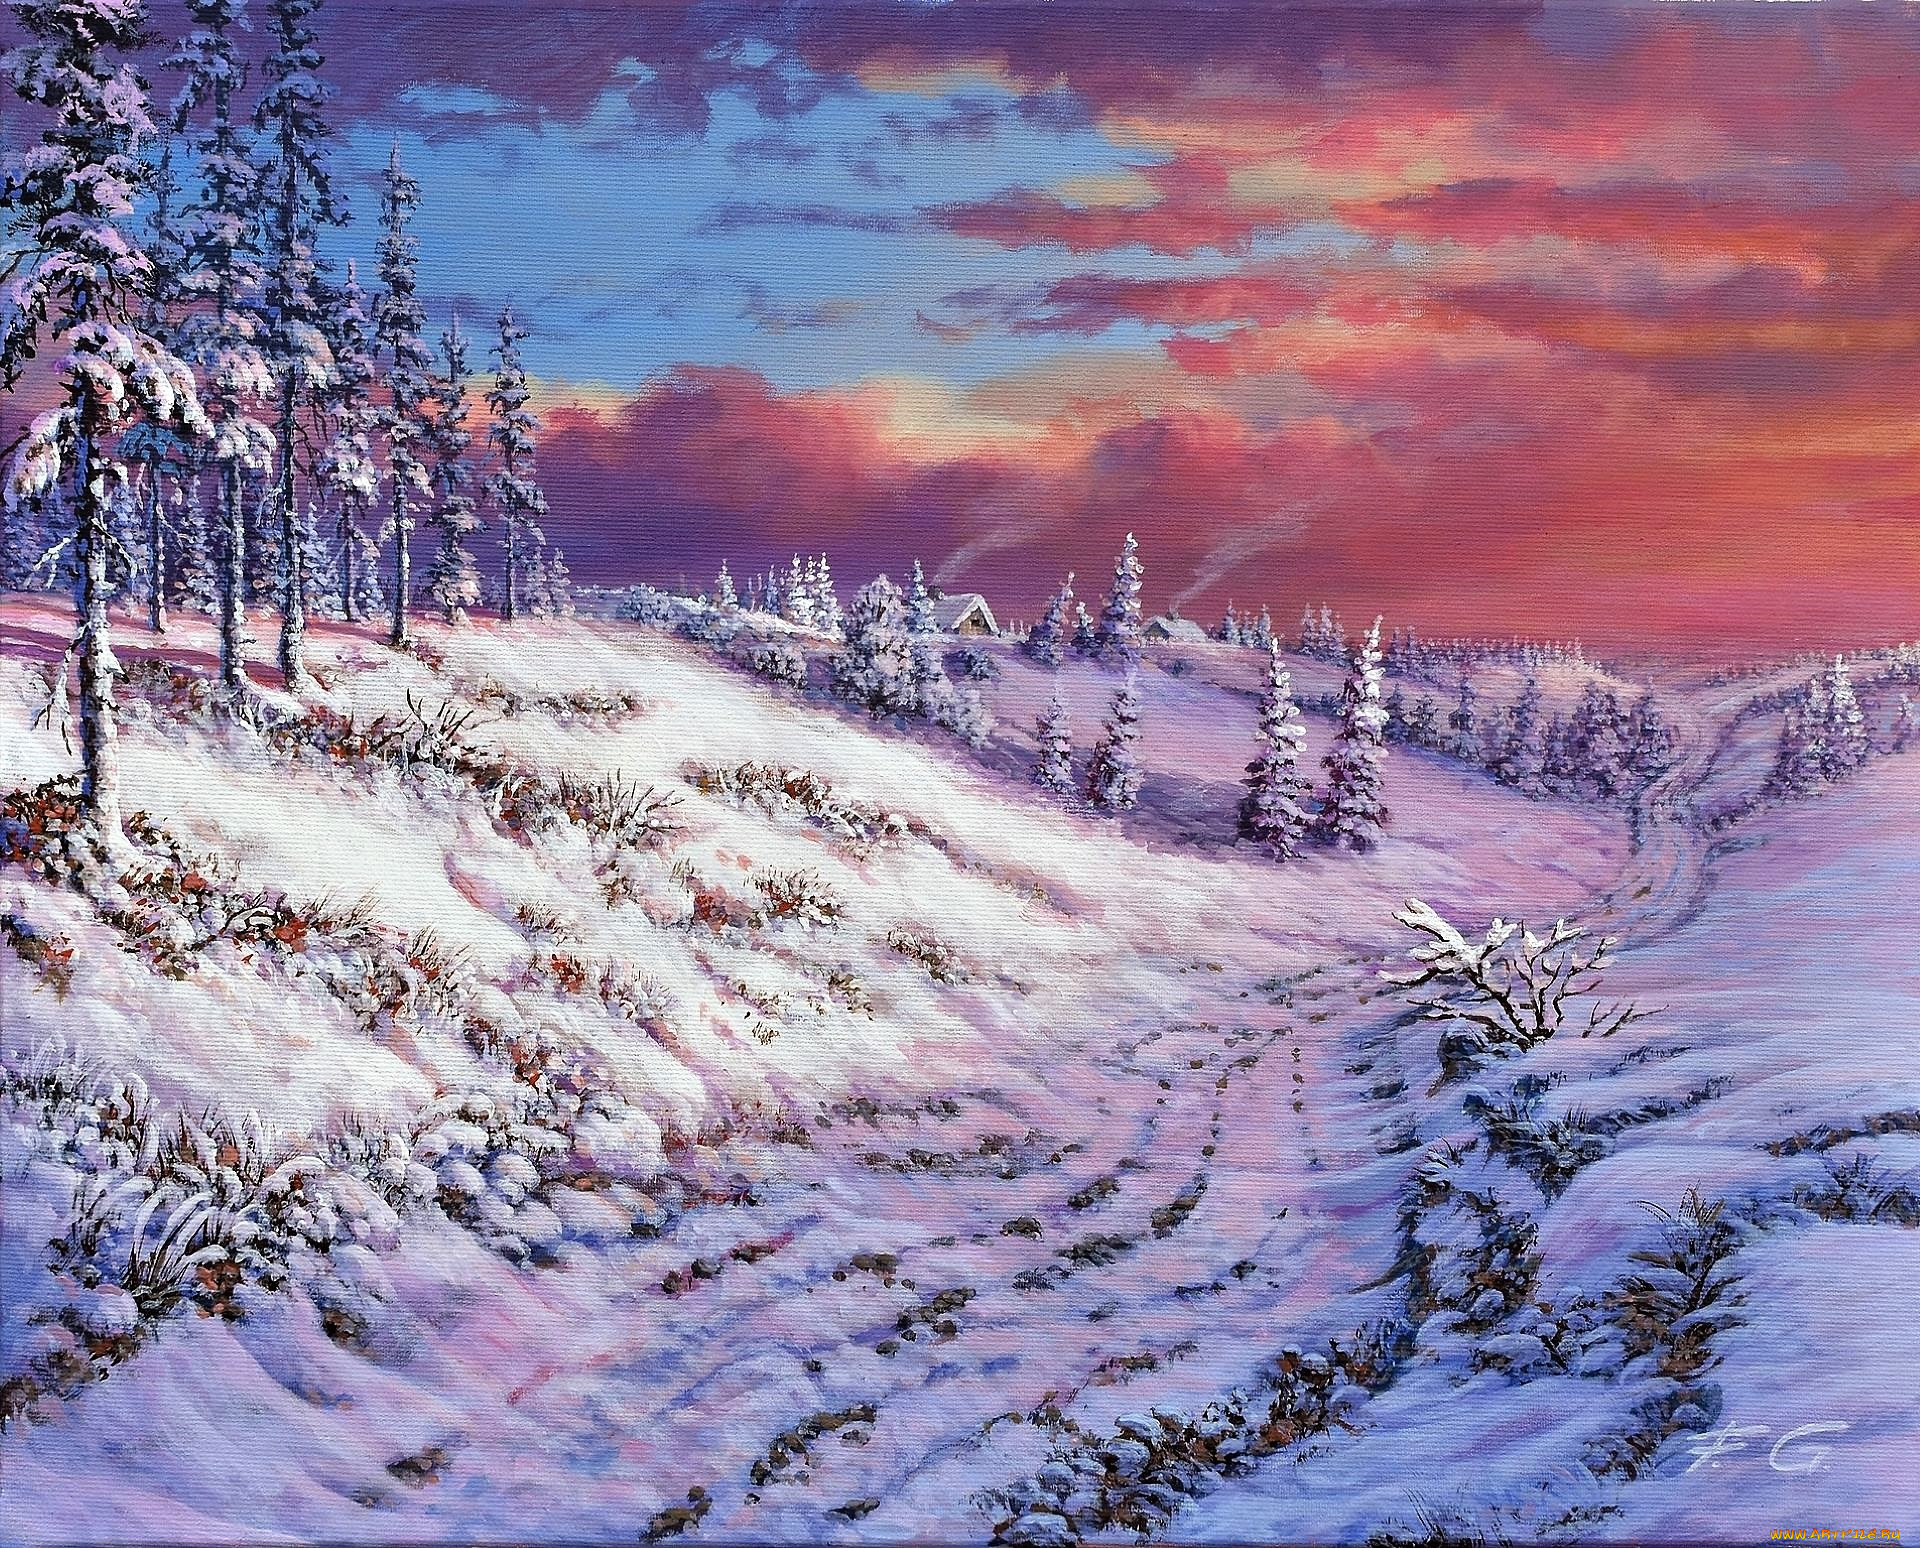 рисованное, живопись, закат, облака, деревья, снег, зима, овраг